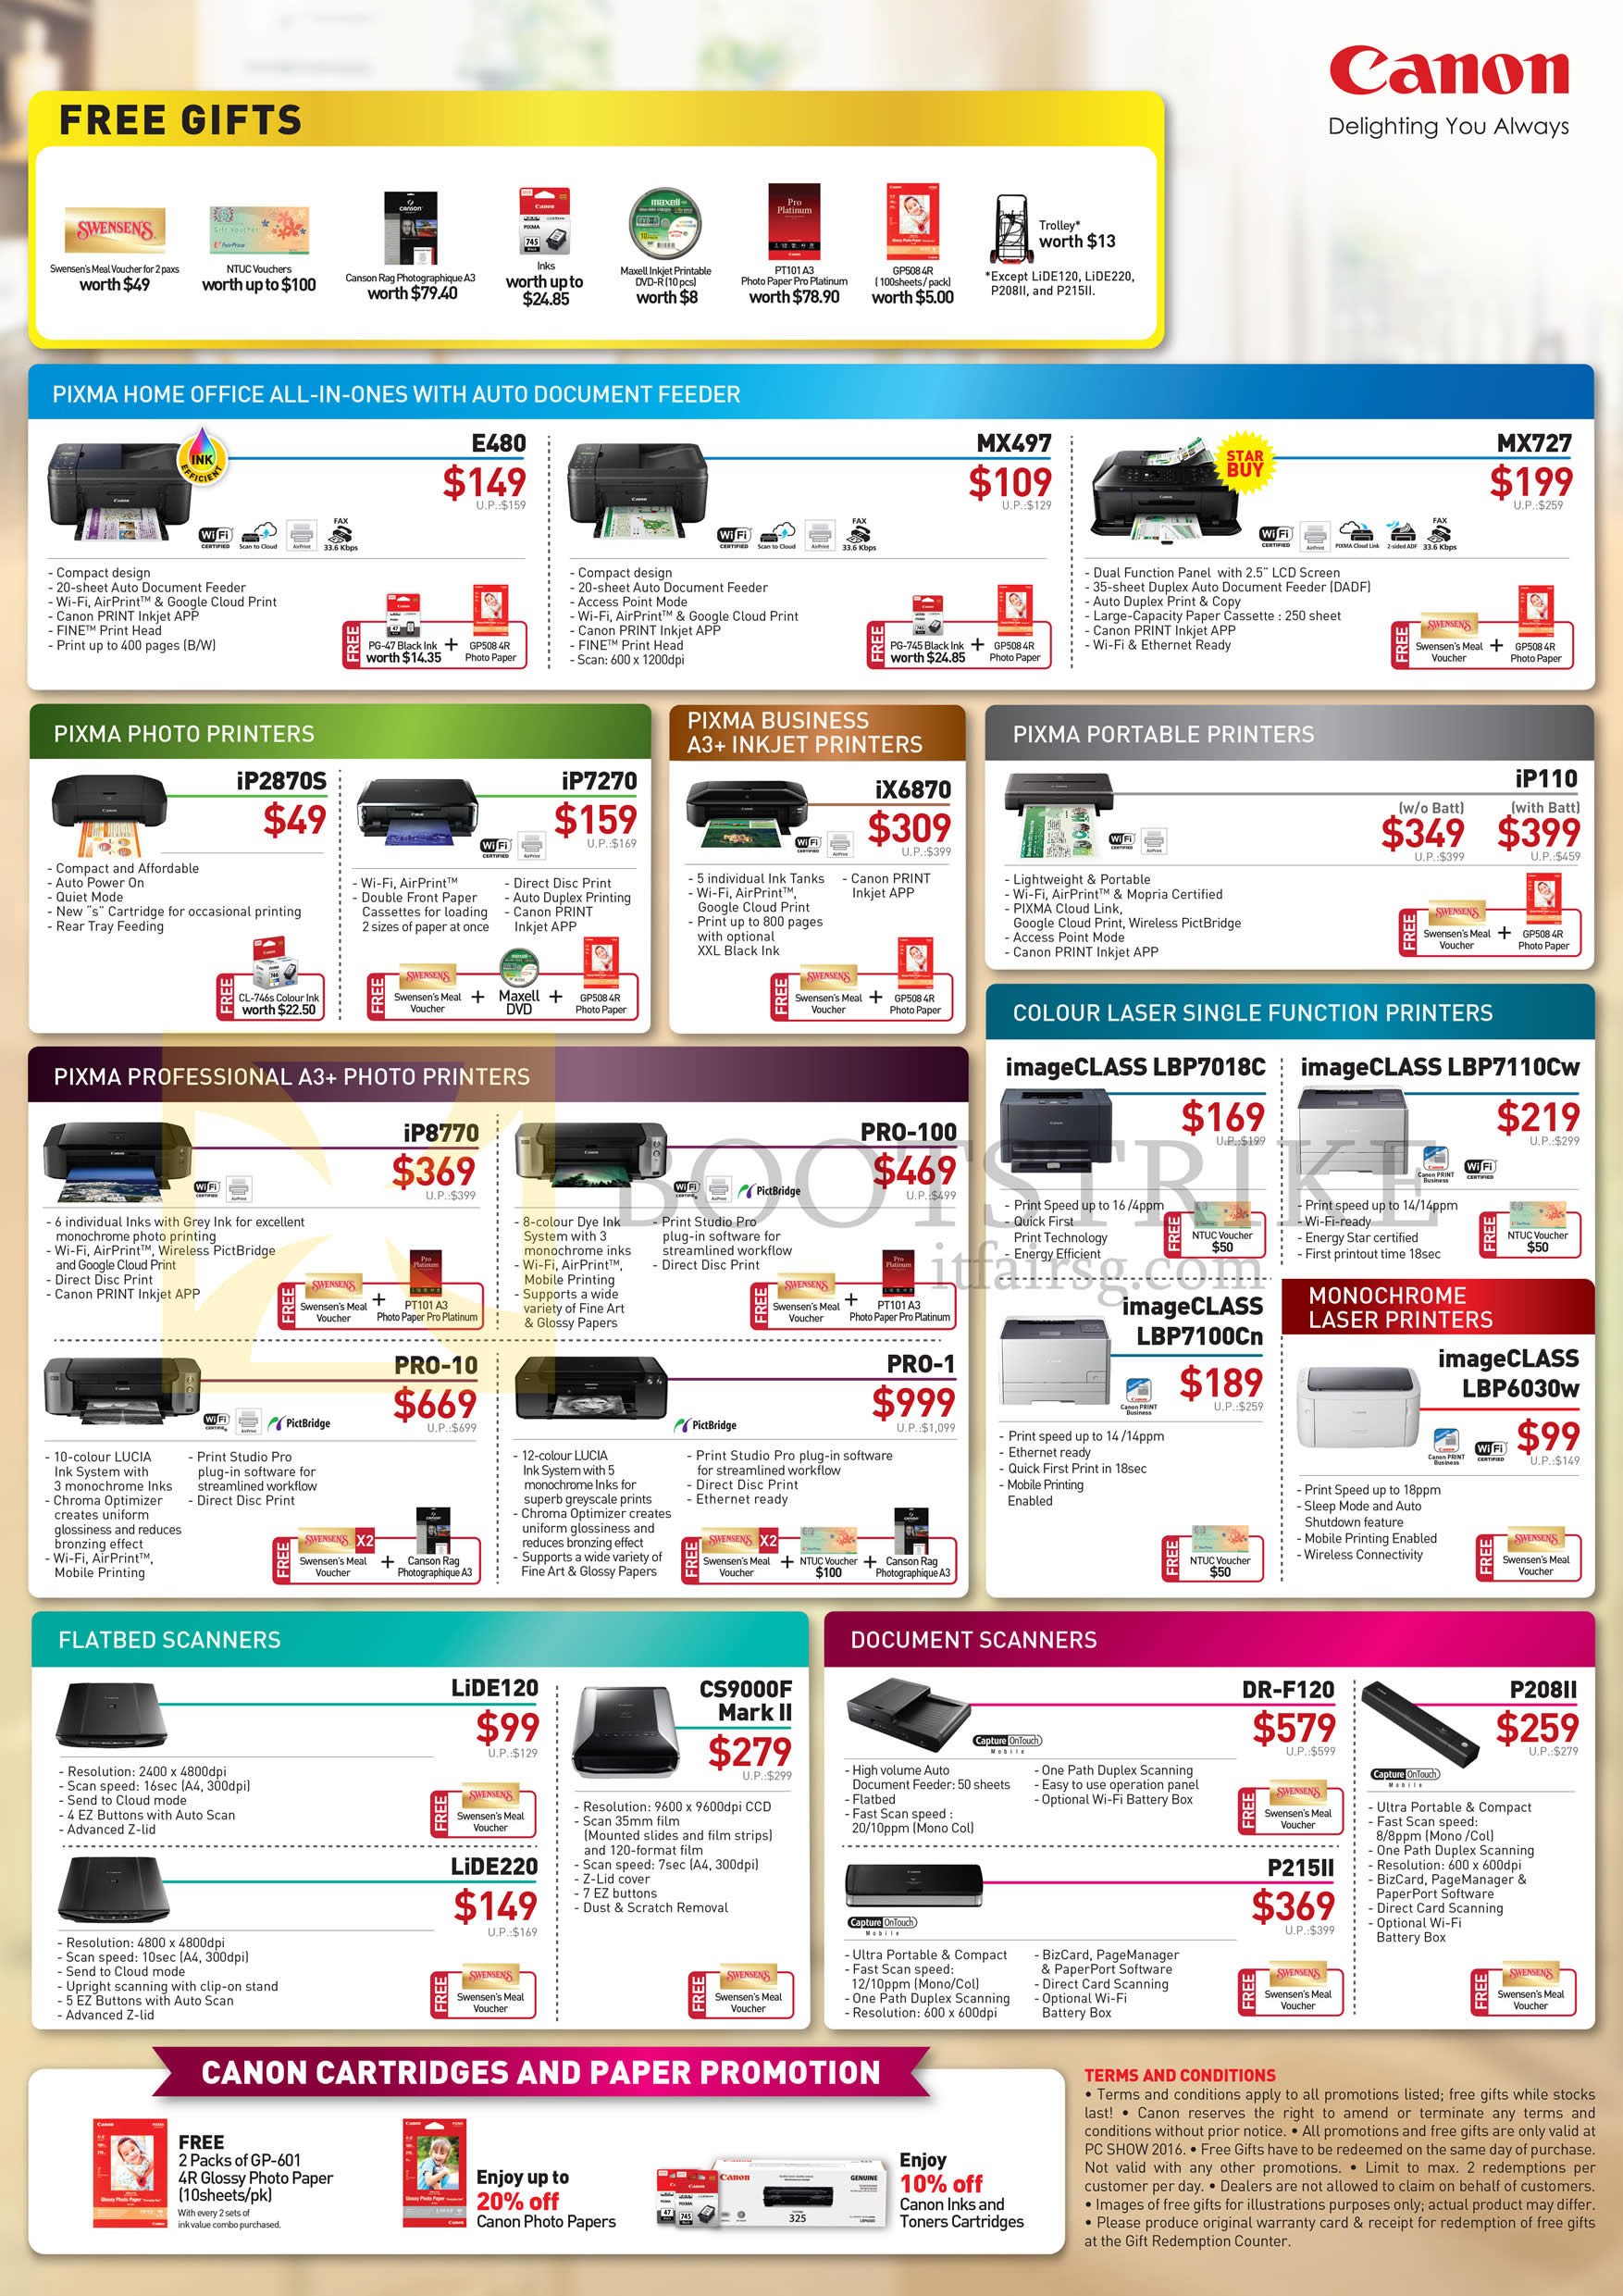 PC SHOW 2016 price list image brochure of Canon Printers, Scanners Pixma E480, MX497, MX727, IP2870S, IP7170, IP8770, Pro-100, ImageCLASS LBP7018C, 7110Cw, 7100Cn, 6030w, LiDE120, CS9000F Mark II, DR-F120, P215II